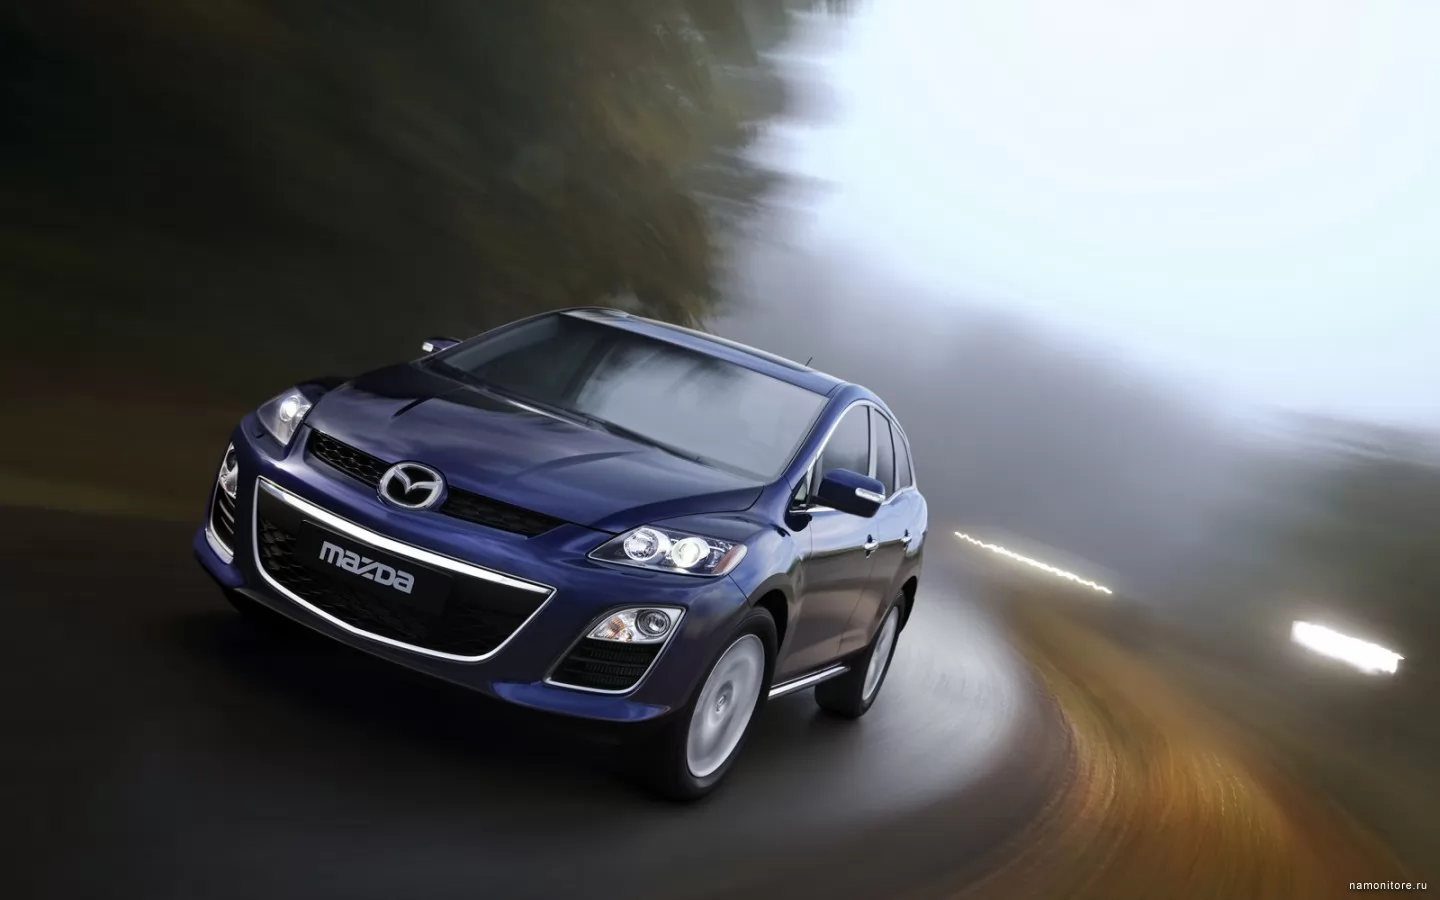 Mazda CX-7, cars, highway, Mazda, speed, technics x